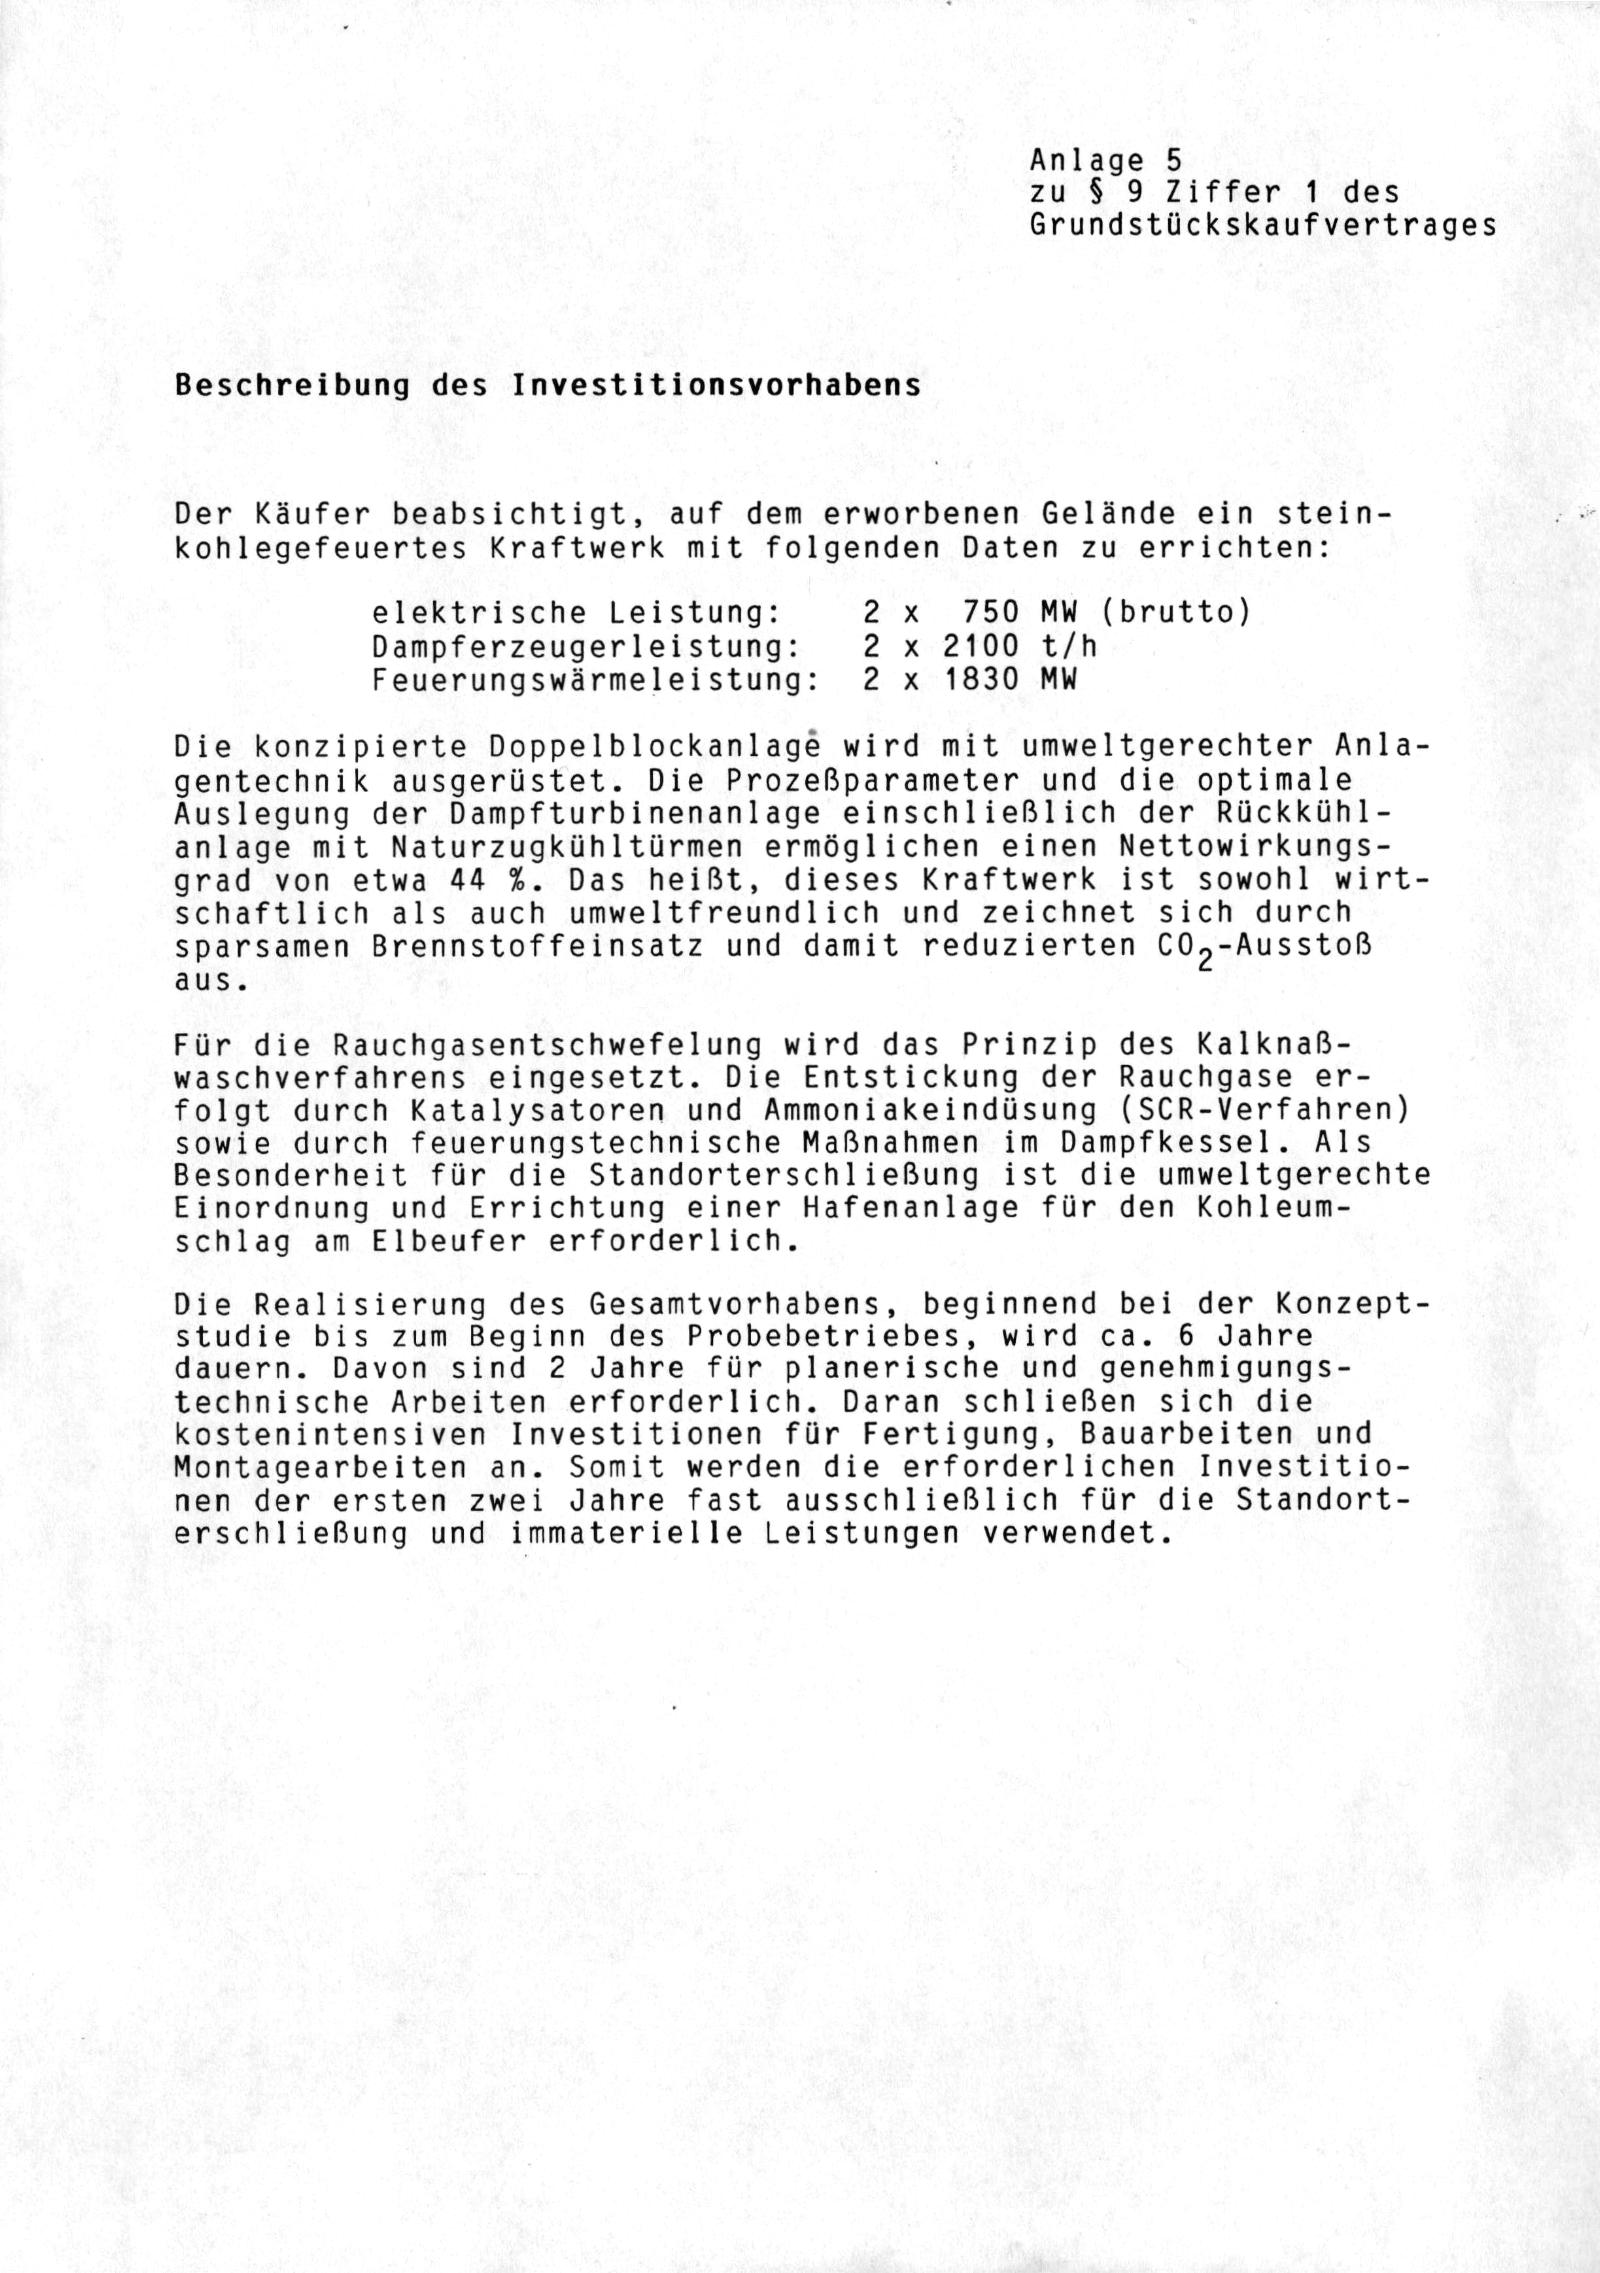 KKW Stendal - Invest Steinkohlekraftwerk 1992